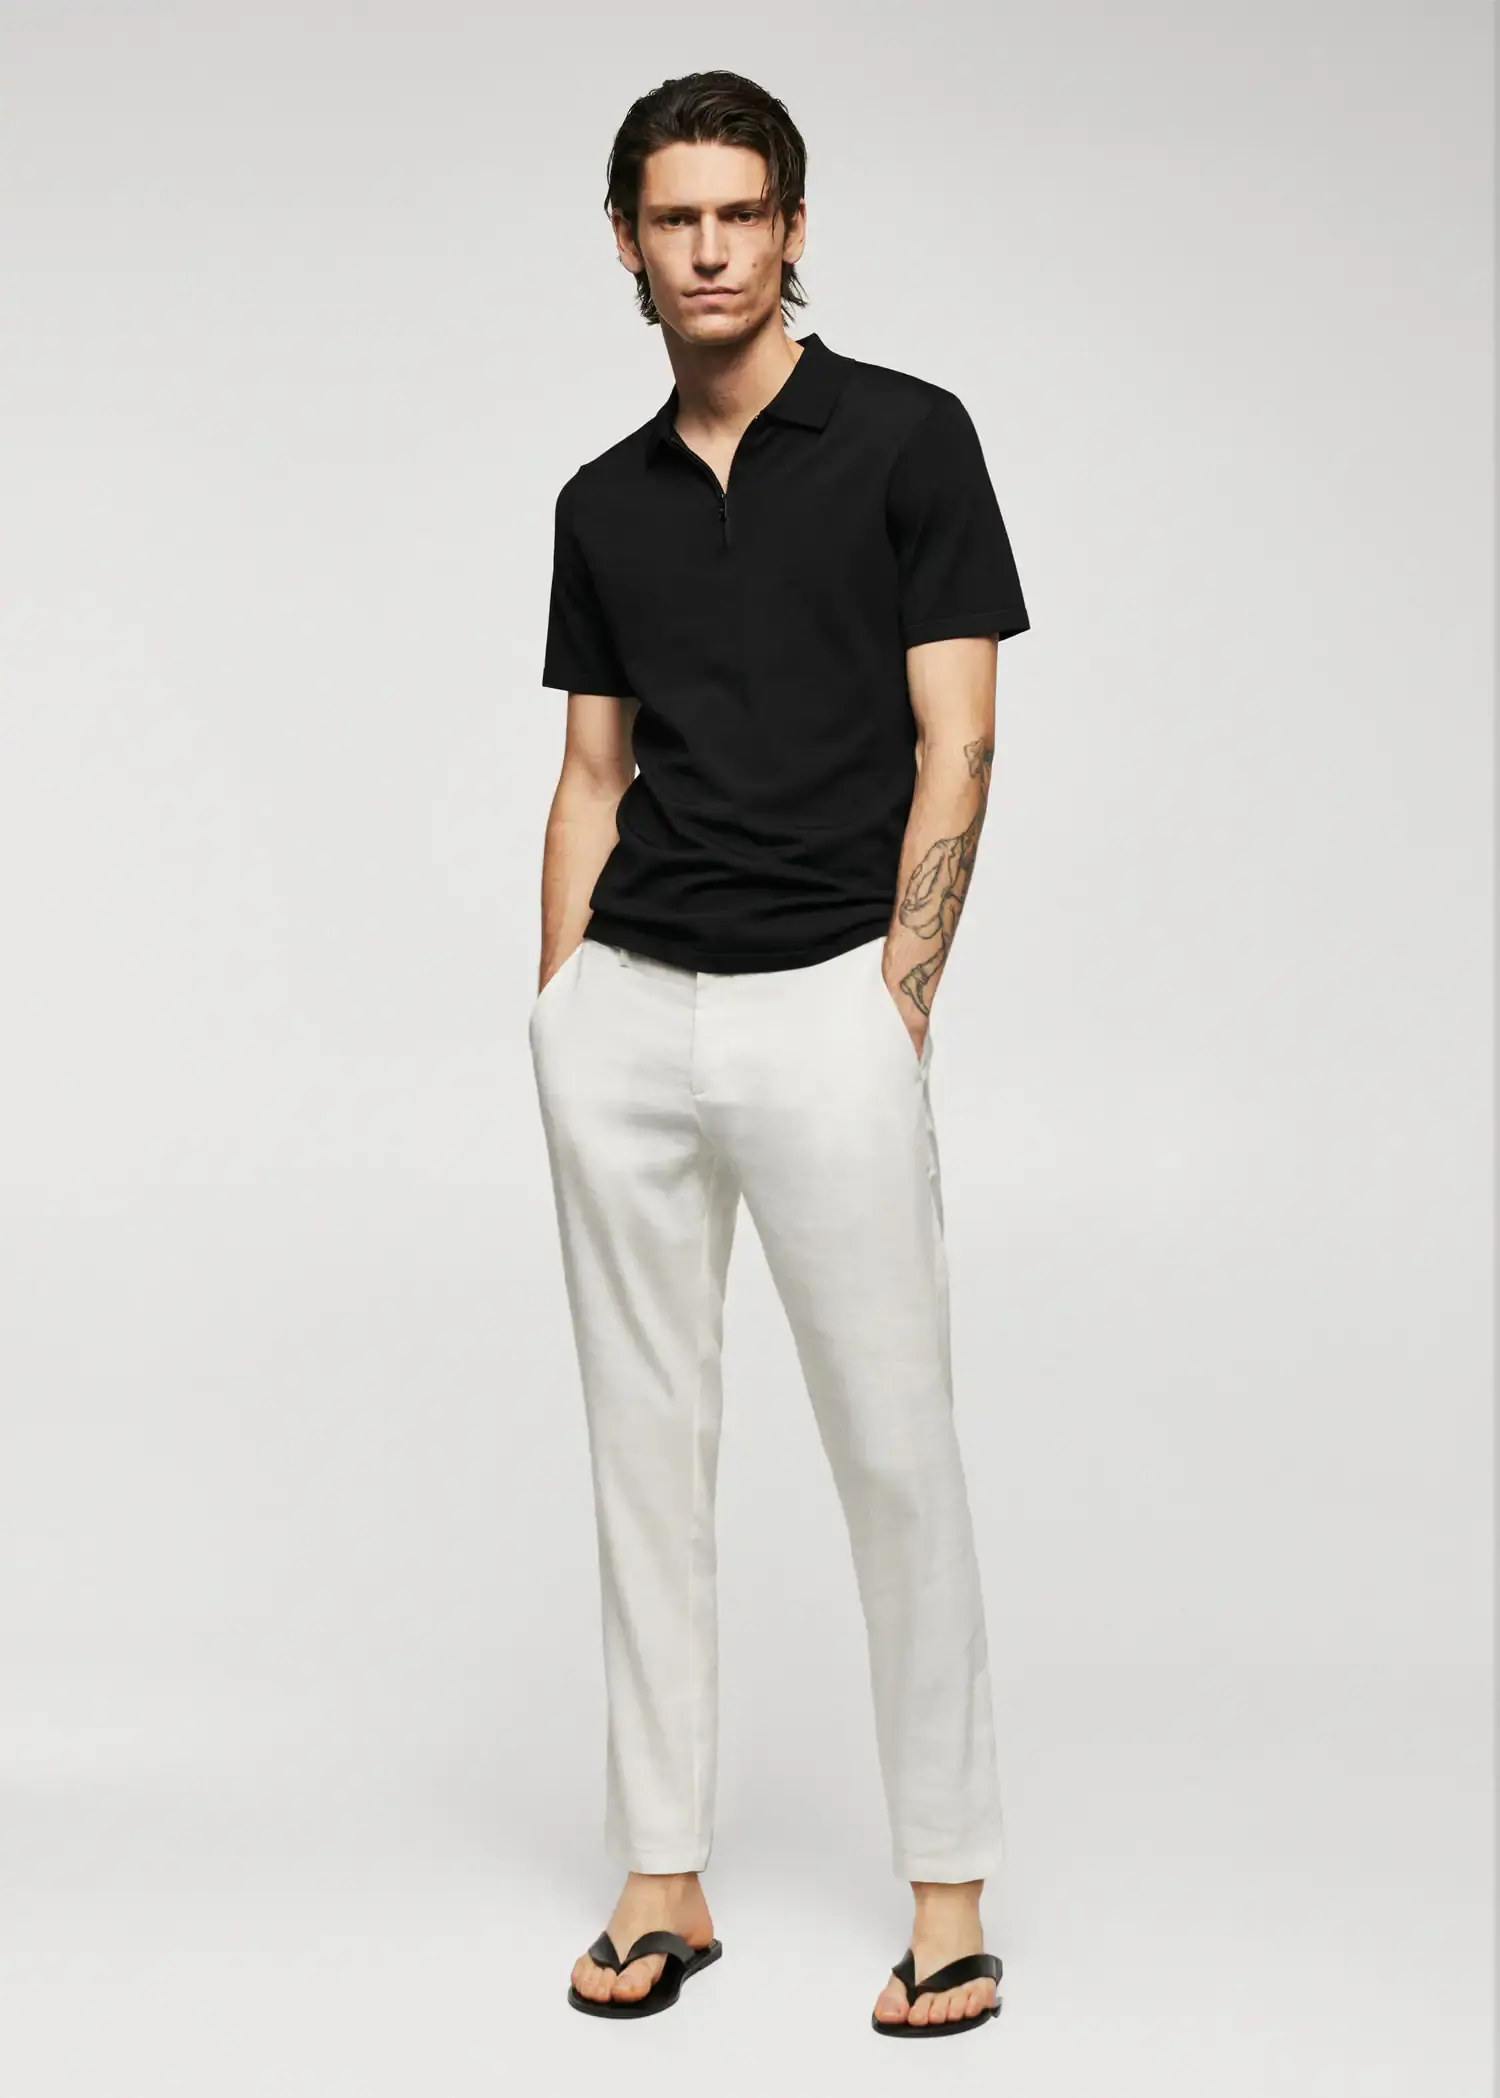 Mango Fine-knit polo shirt with zipper. a man wearing a black shirt and white pants. 